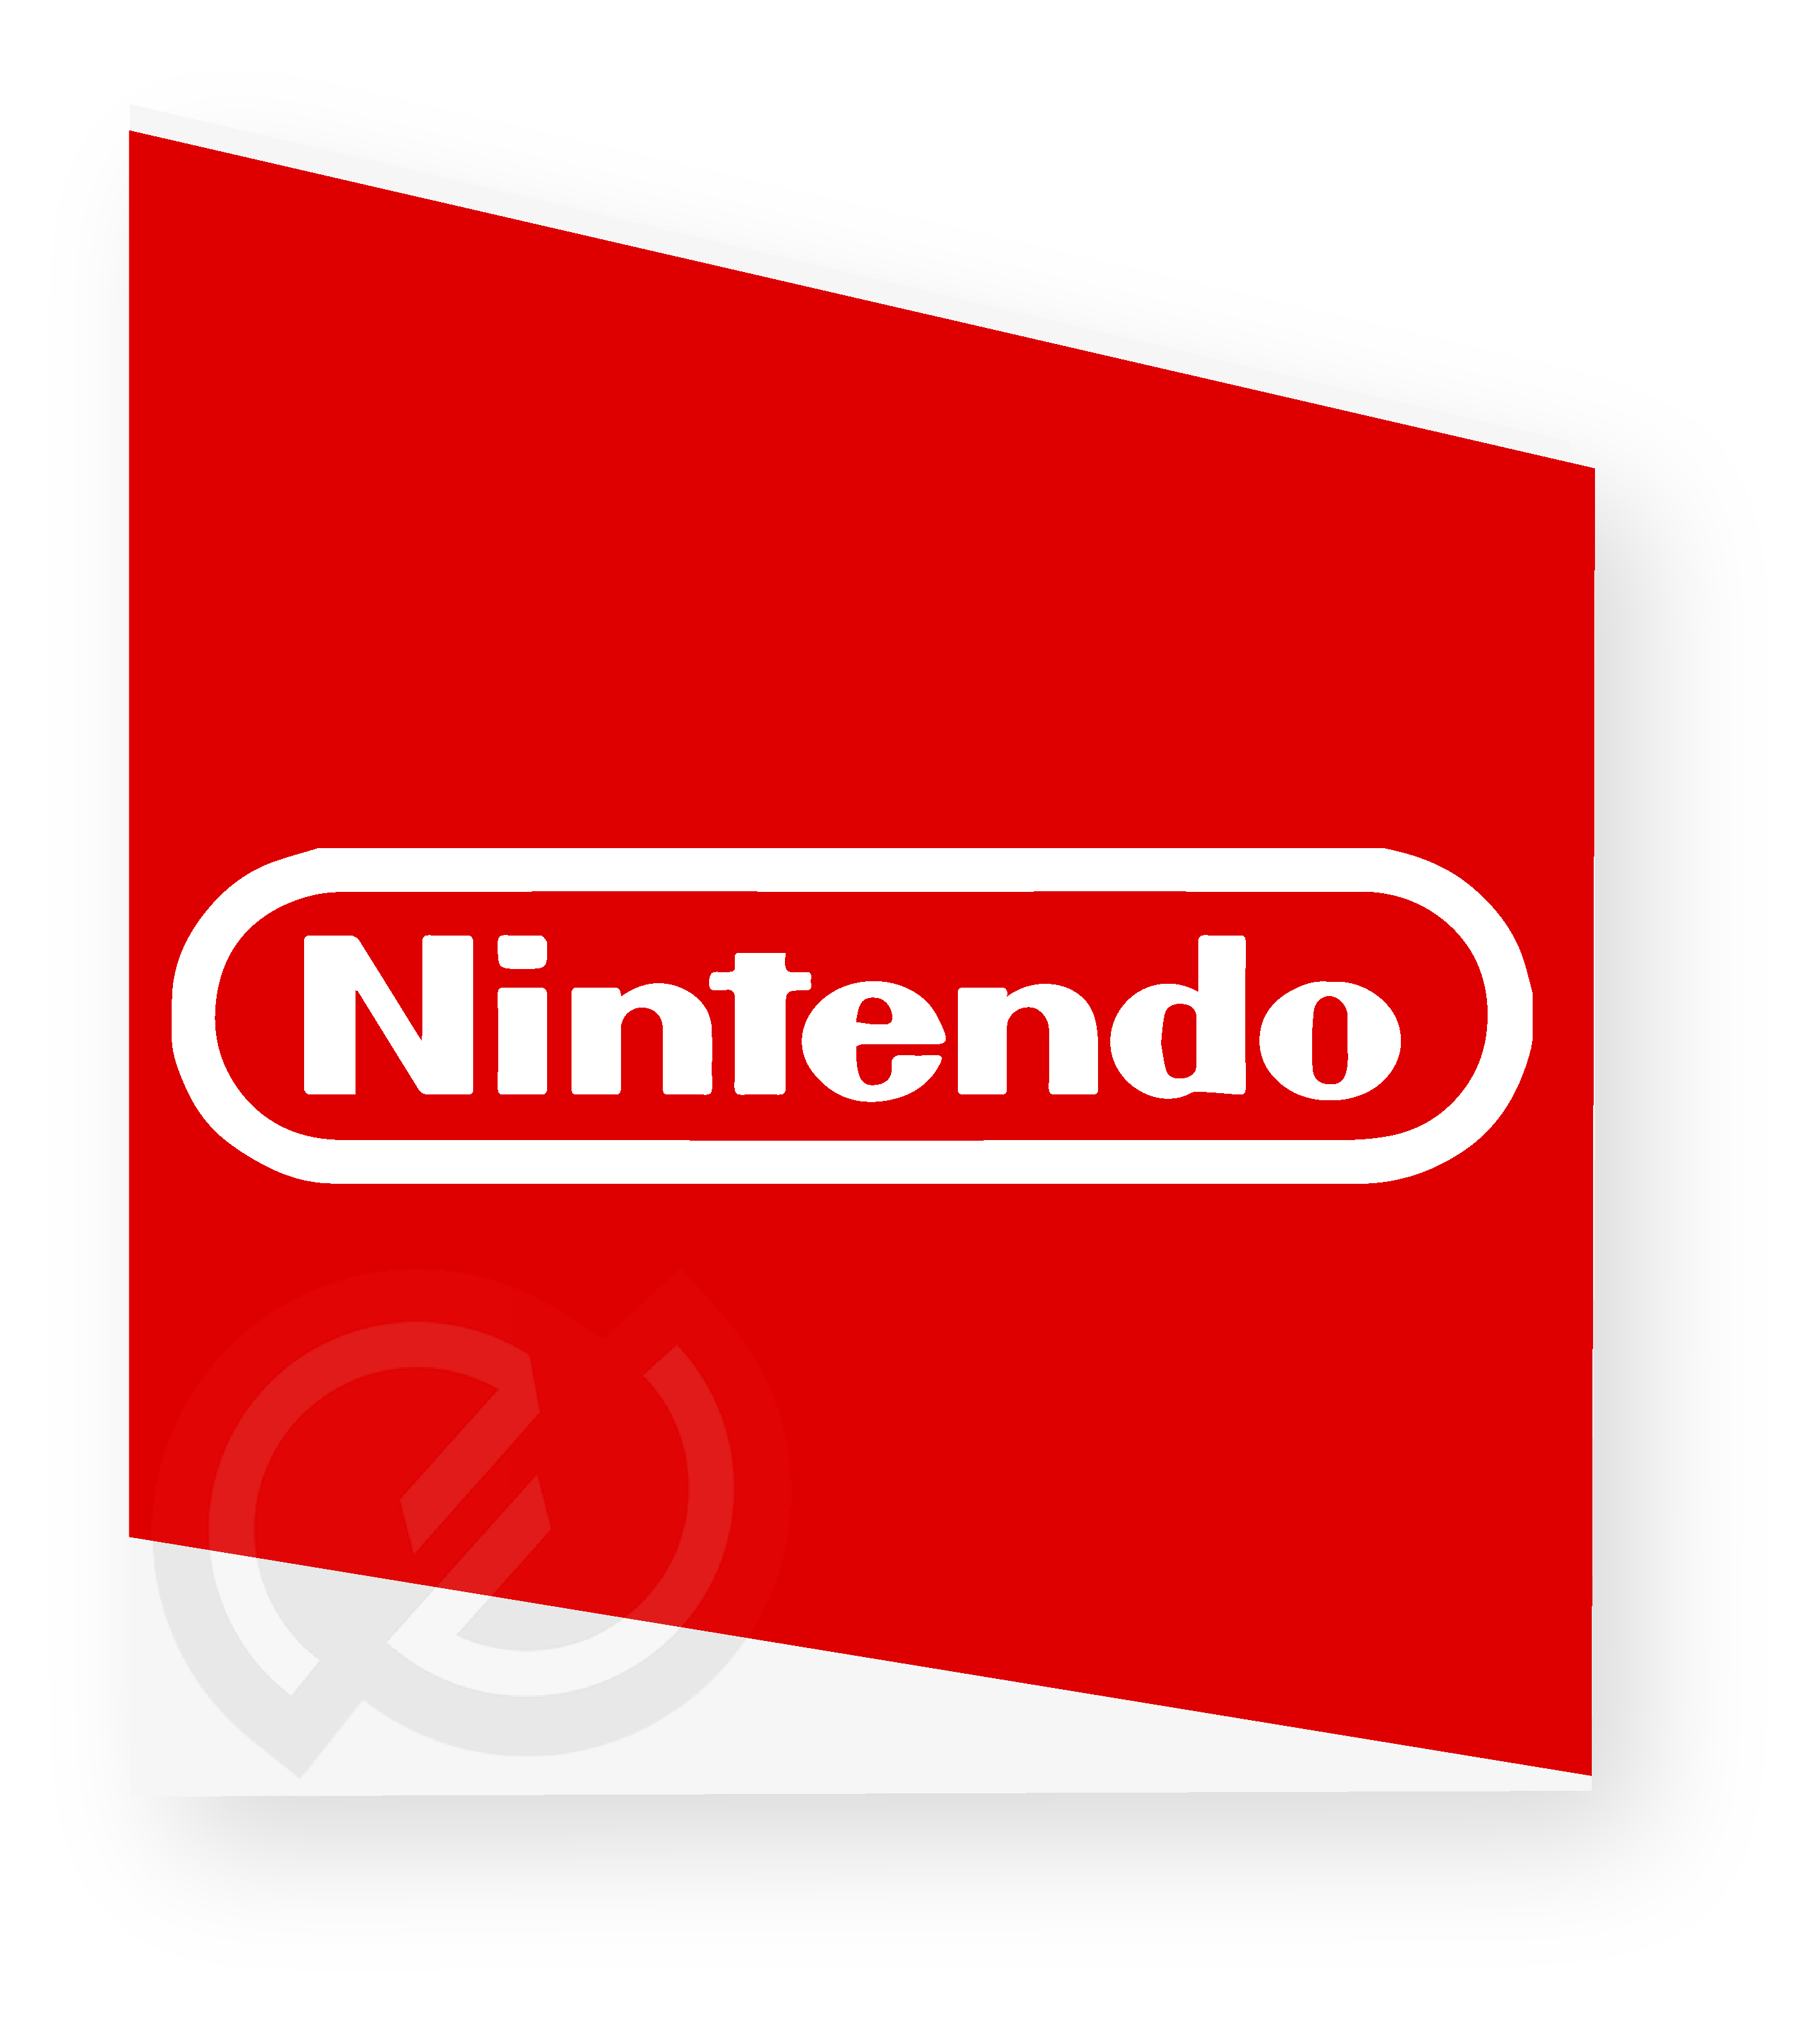 Image logo Nintendo